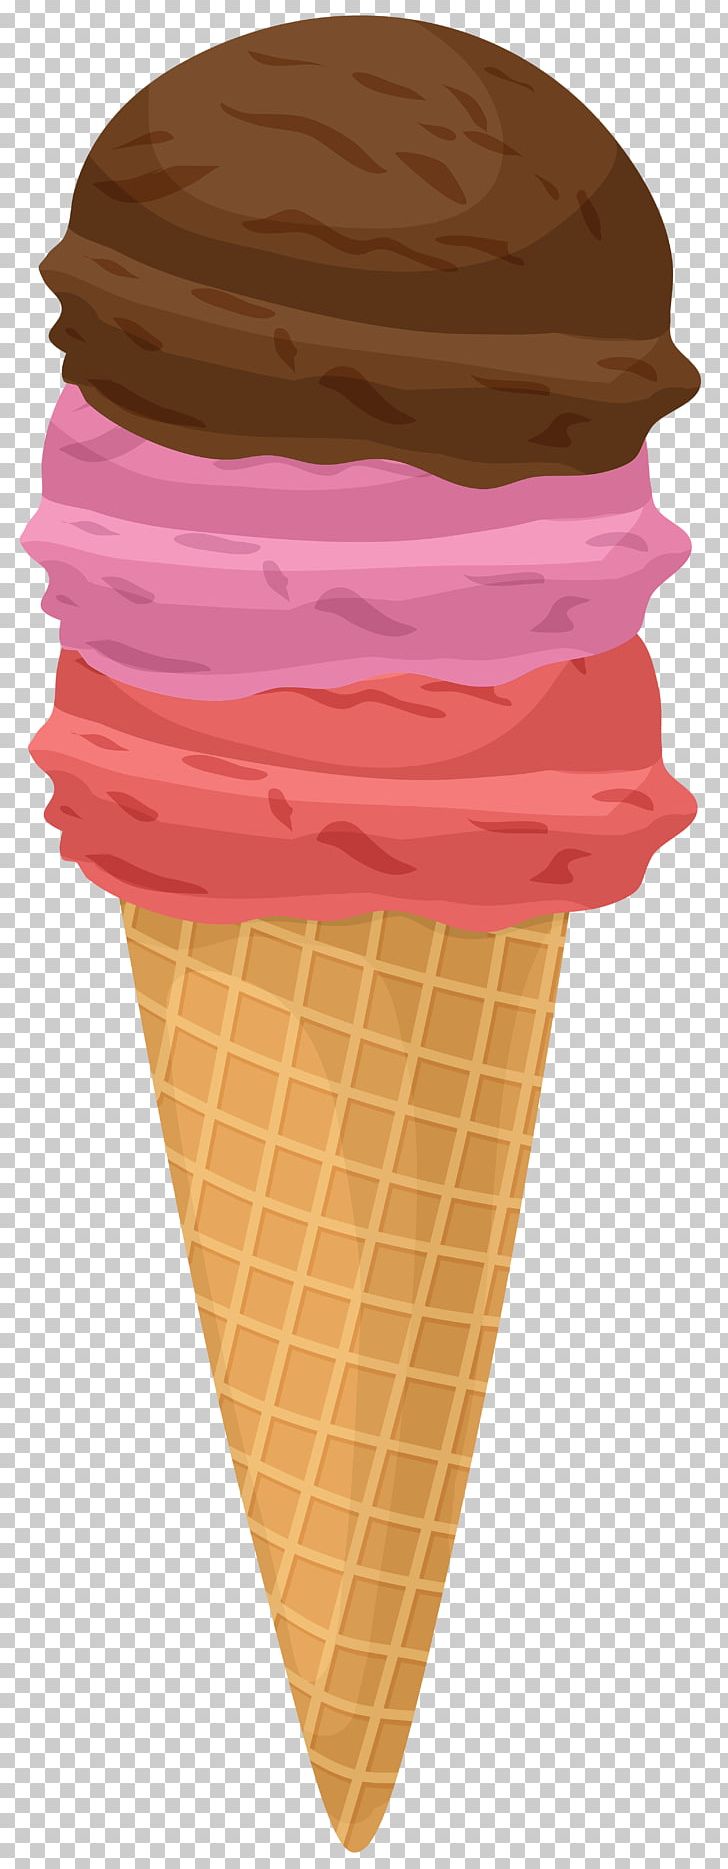 Ice Cream Cones Strawberry Ice Cream Neapolitan Ice Cream PNG, Clipart, Bowl, Cake, Chocolate Ice Cream, Cream, Dairy Product Free PNG Download